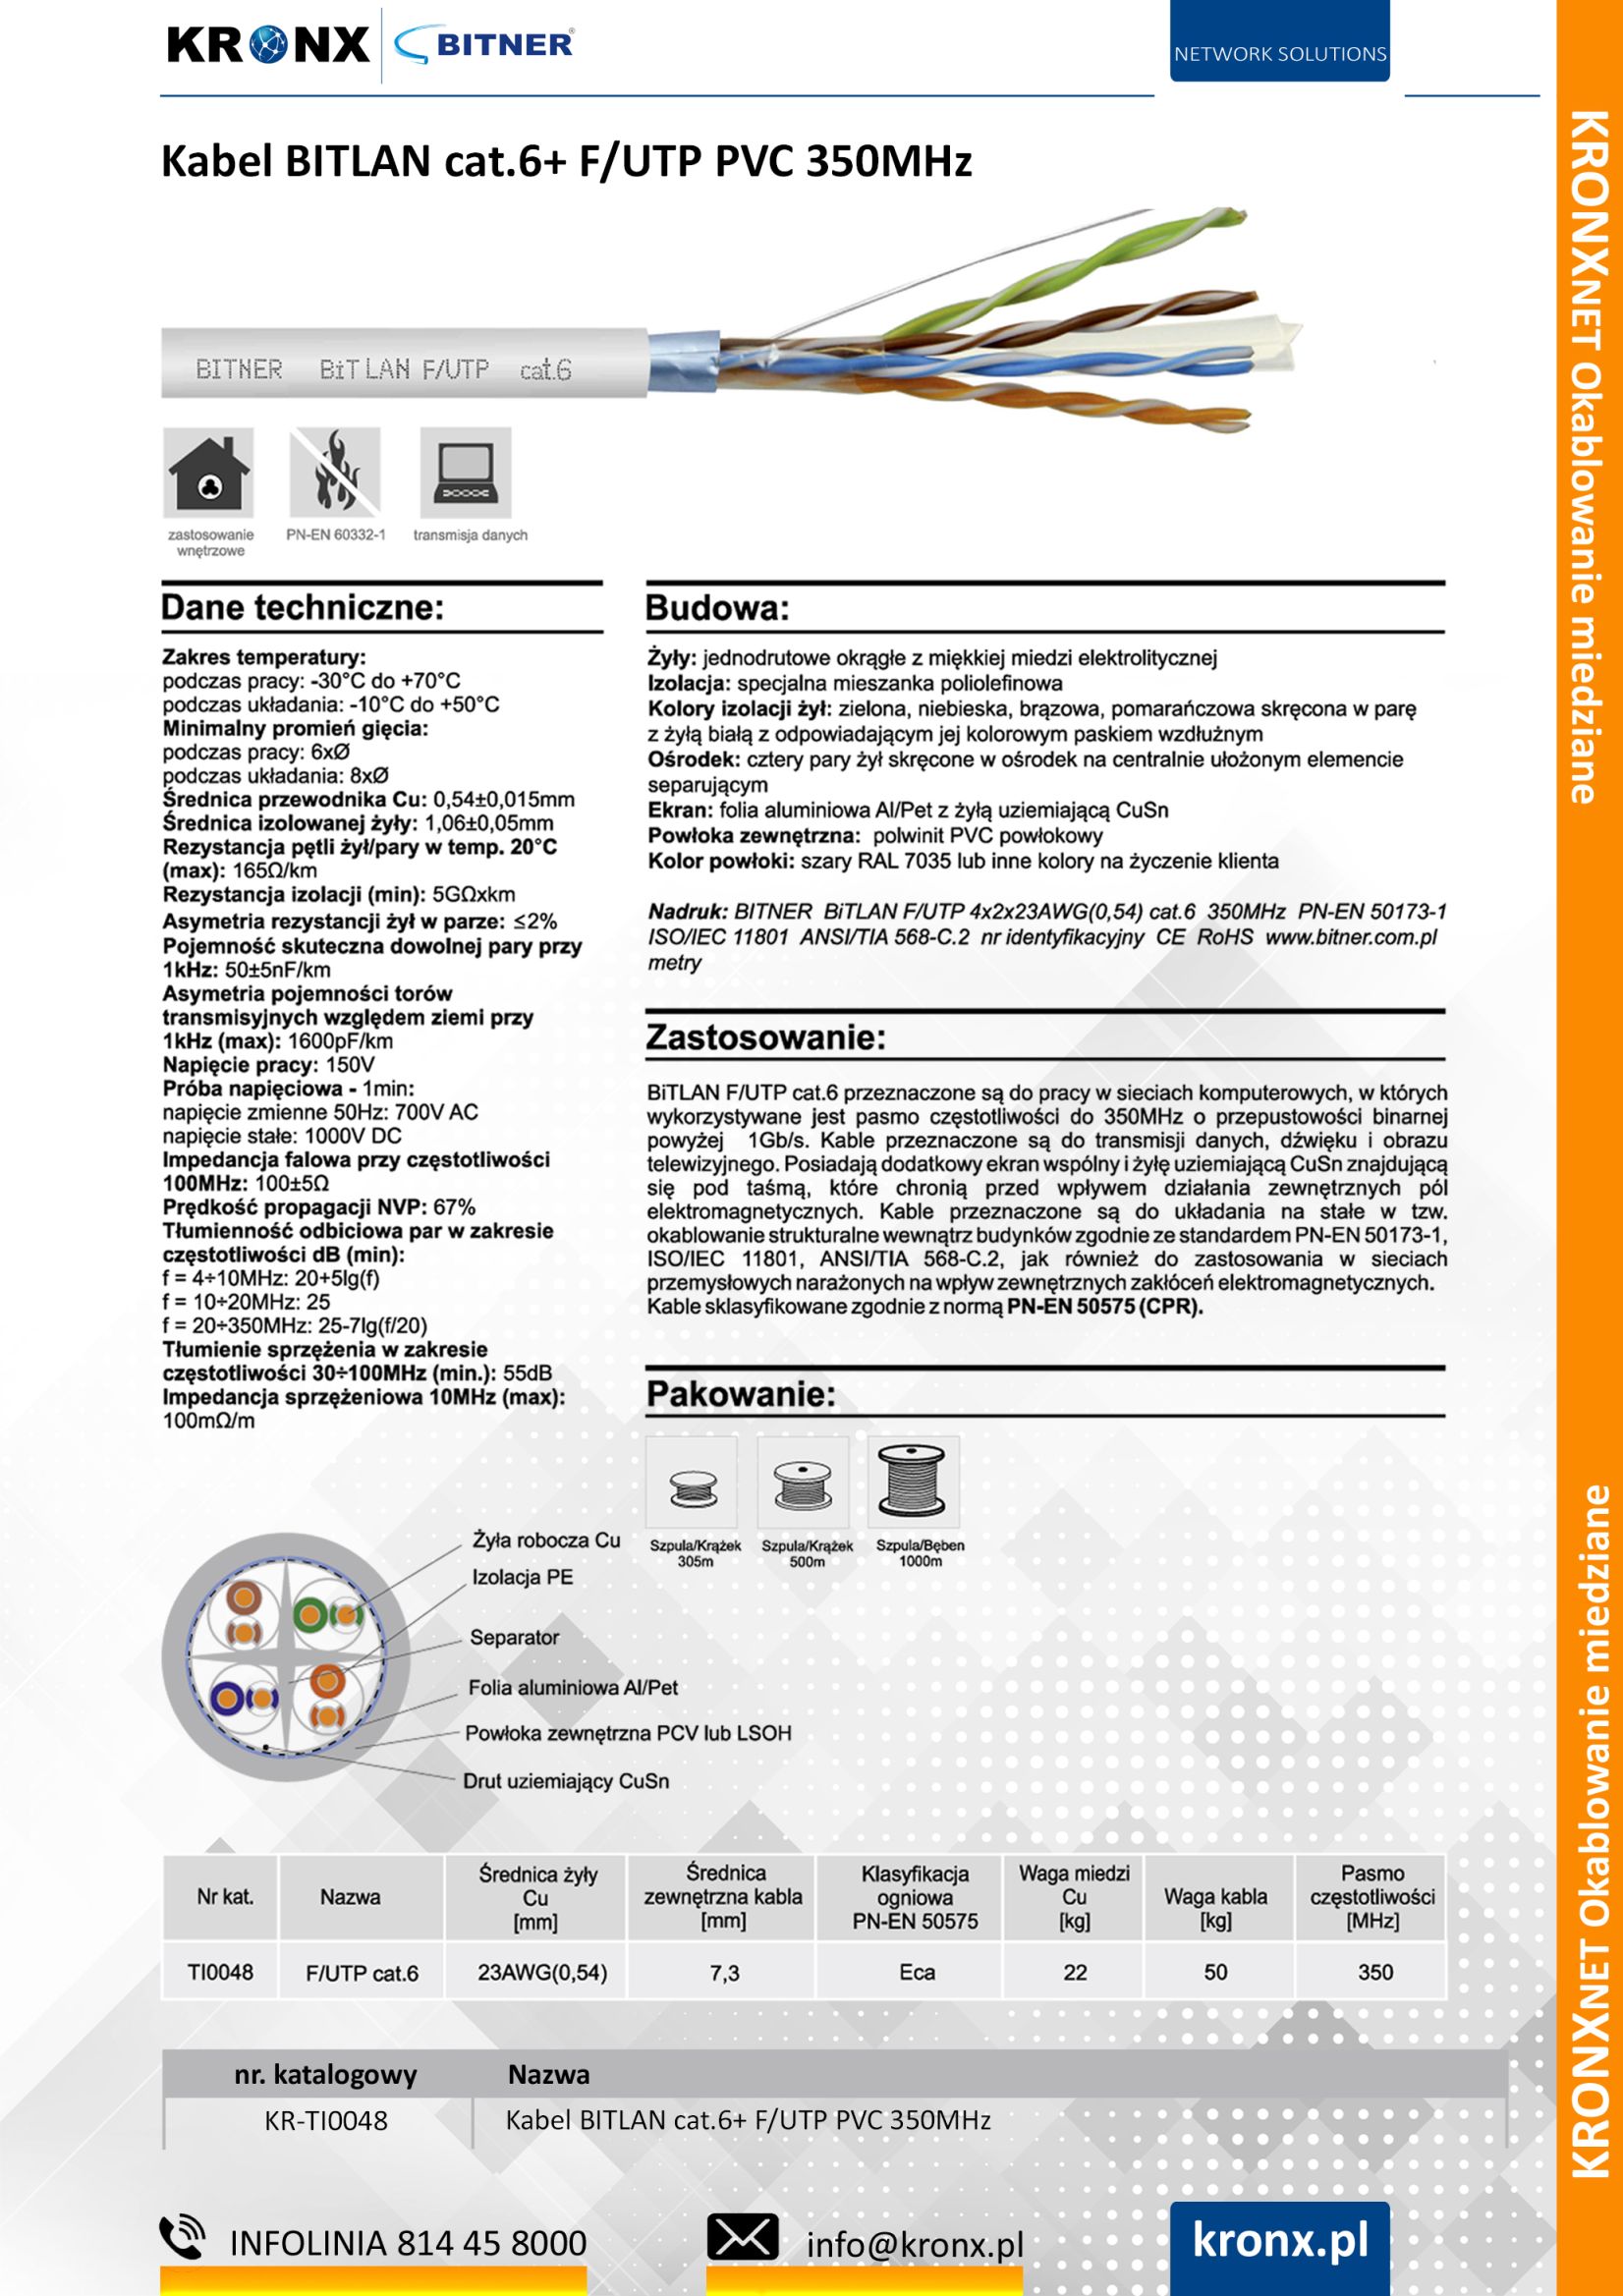 Kabel Bitlan cat6 FUTP PVC 350MHz